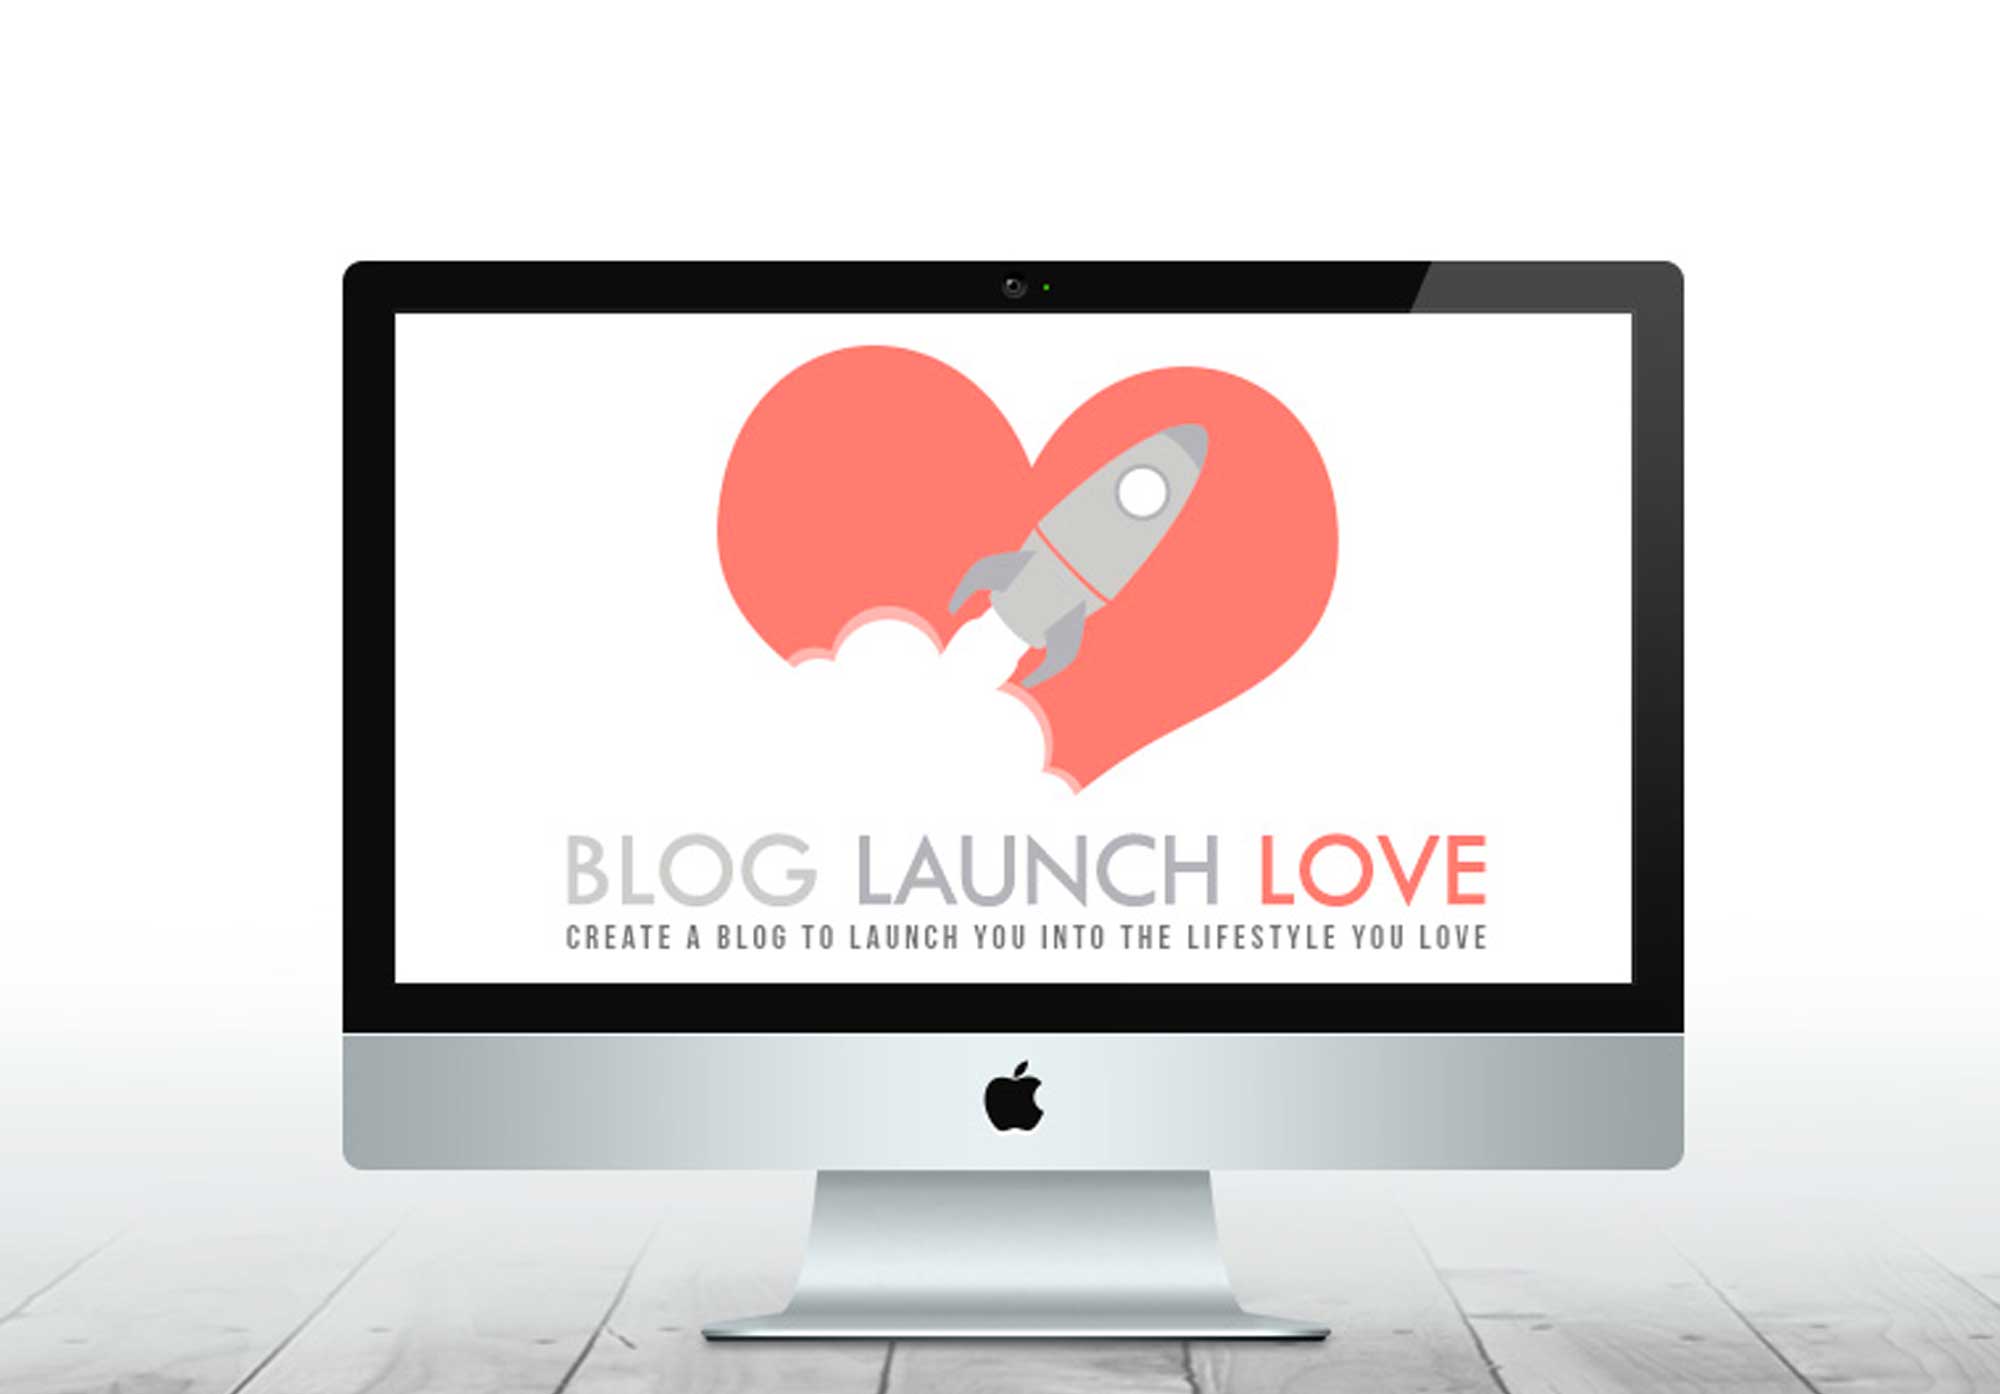 Blog Launch Love Website